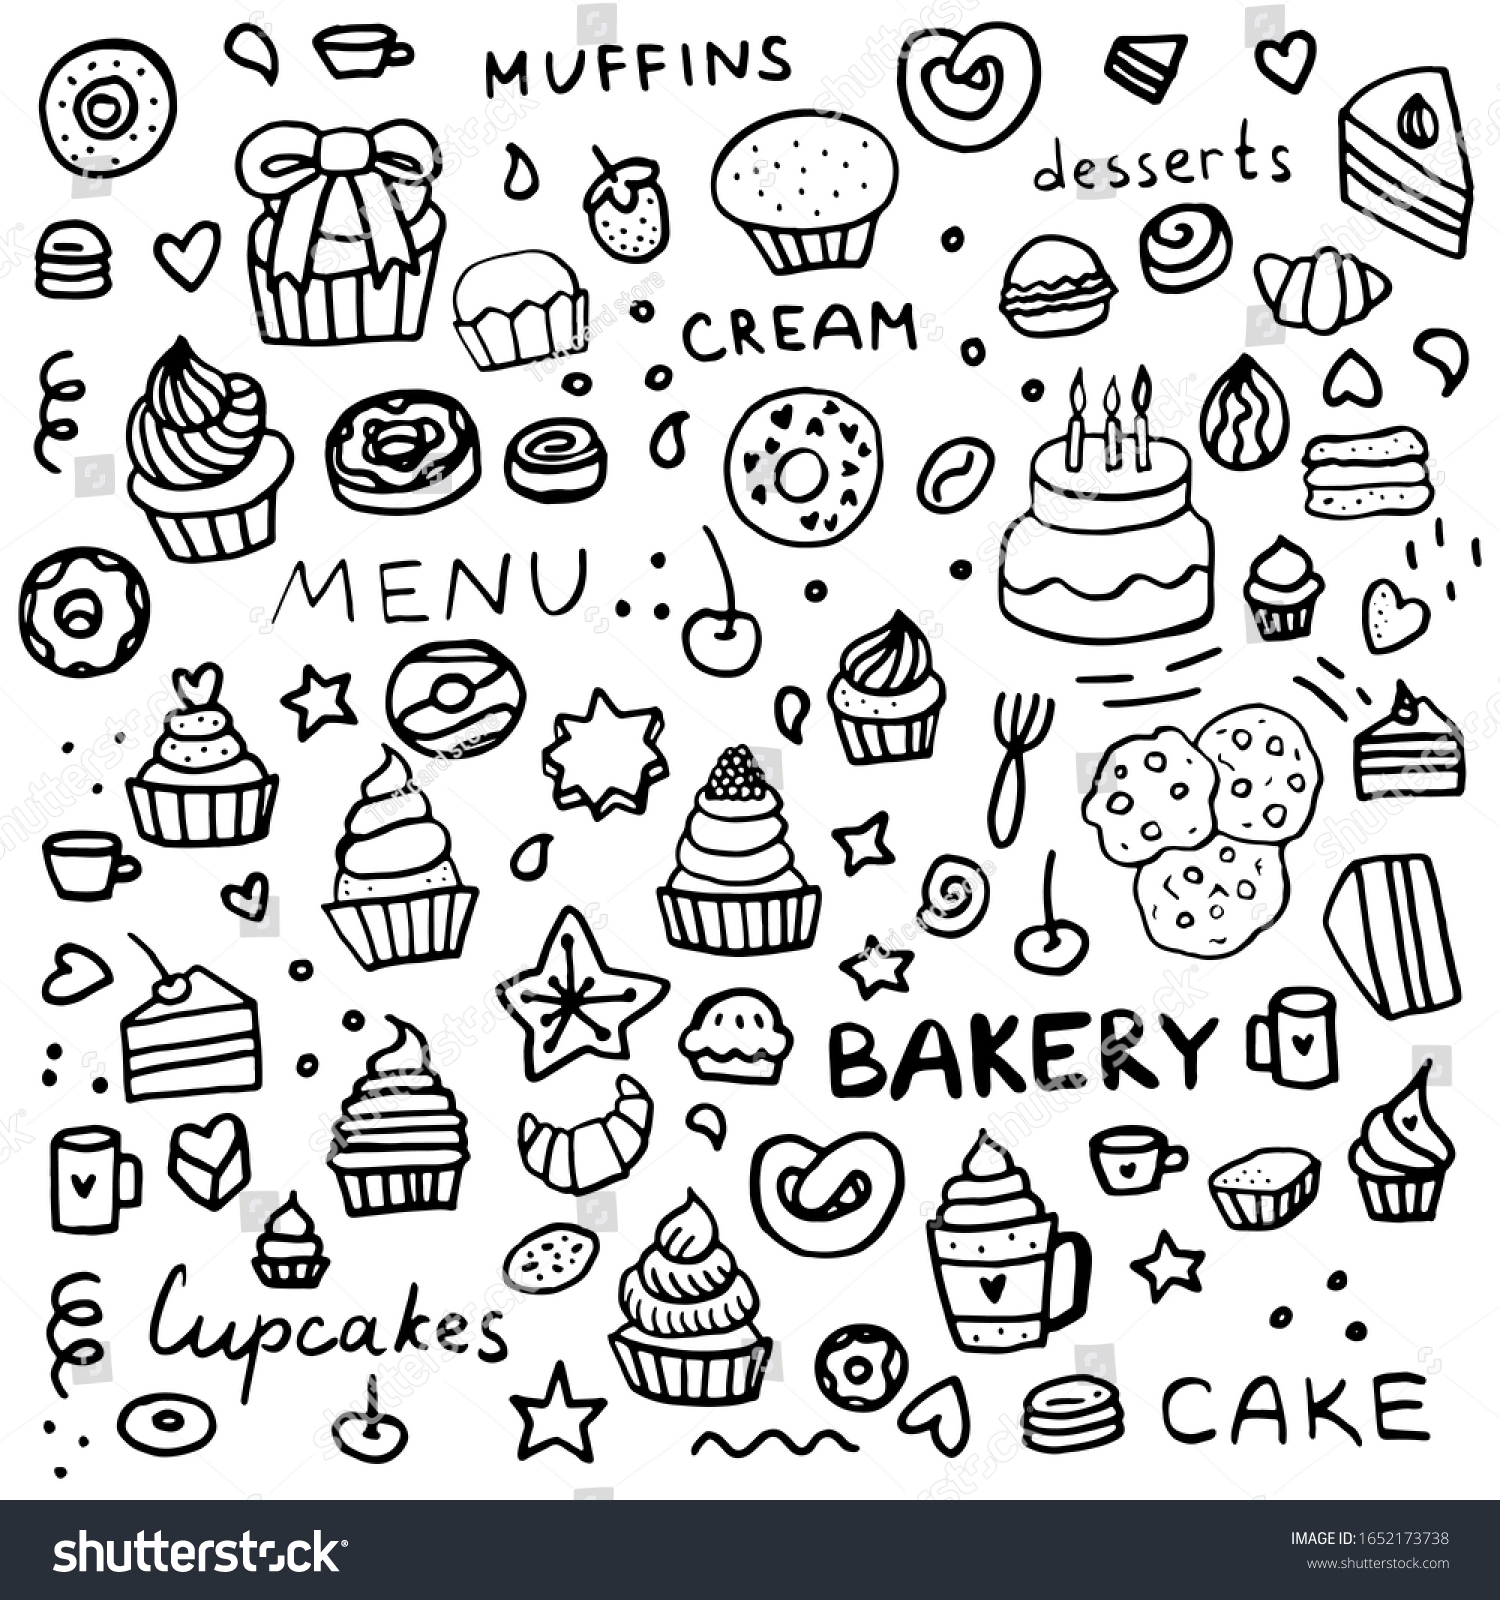 55,392 Pastry doodles Images, Stock Photos & Vectors | Shutterstock